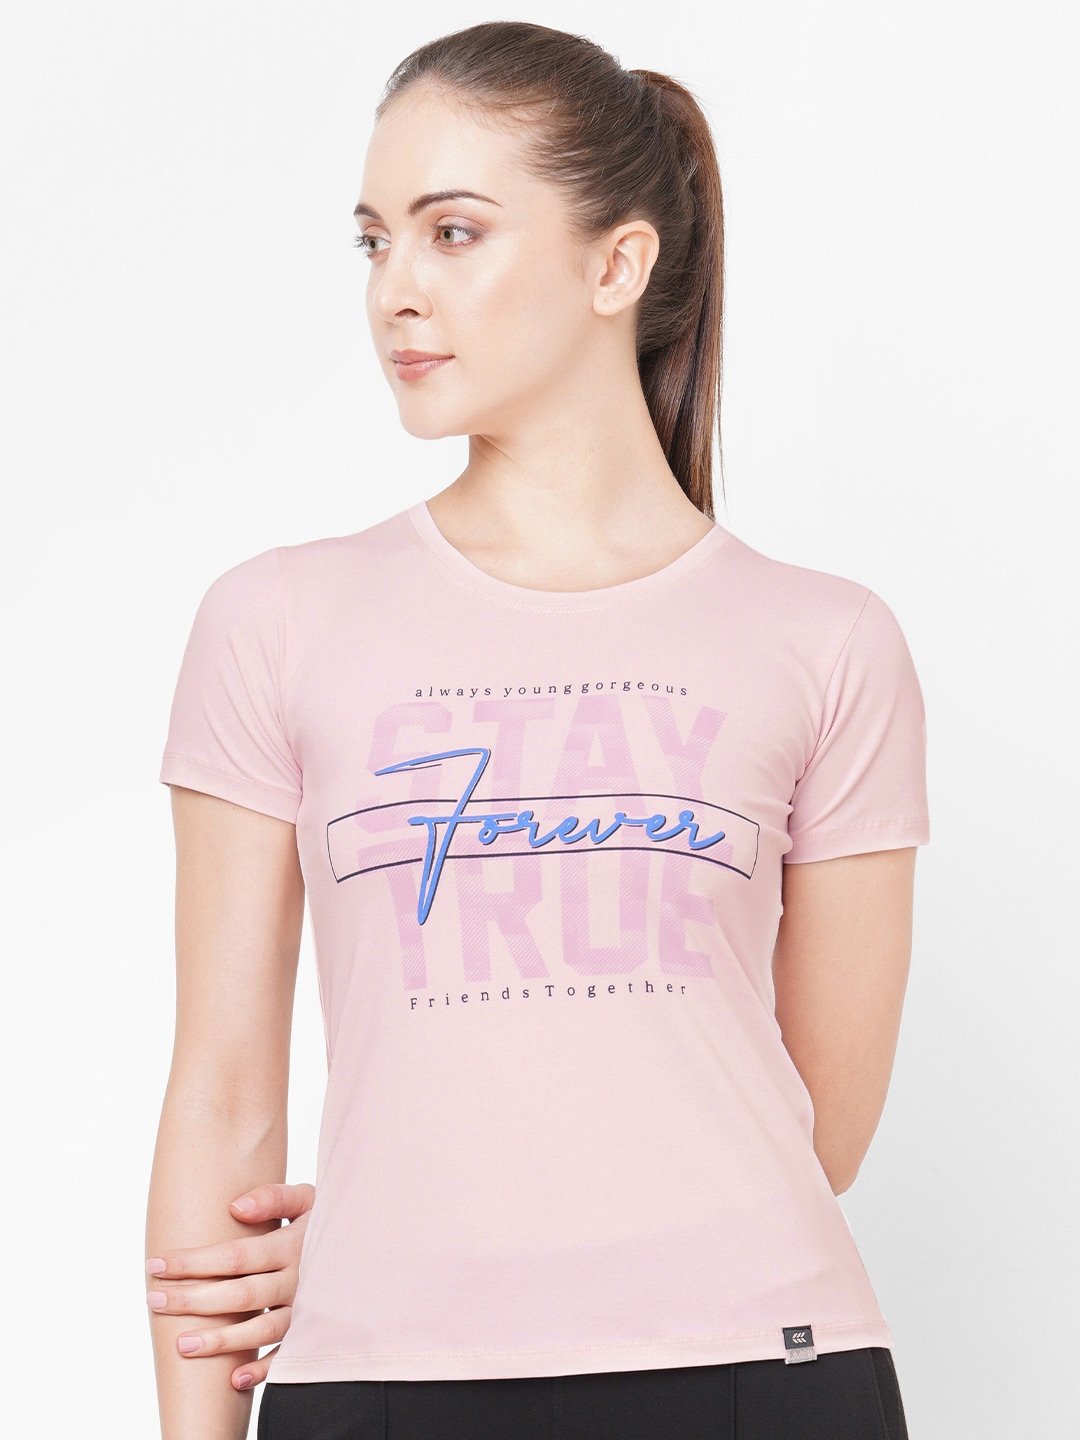 Laasa Sports Solid Women Round Neck Pink T-Shirt - Buy Laasa